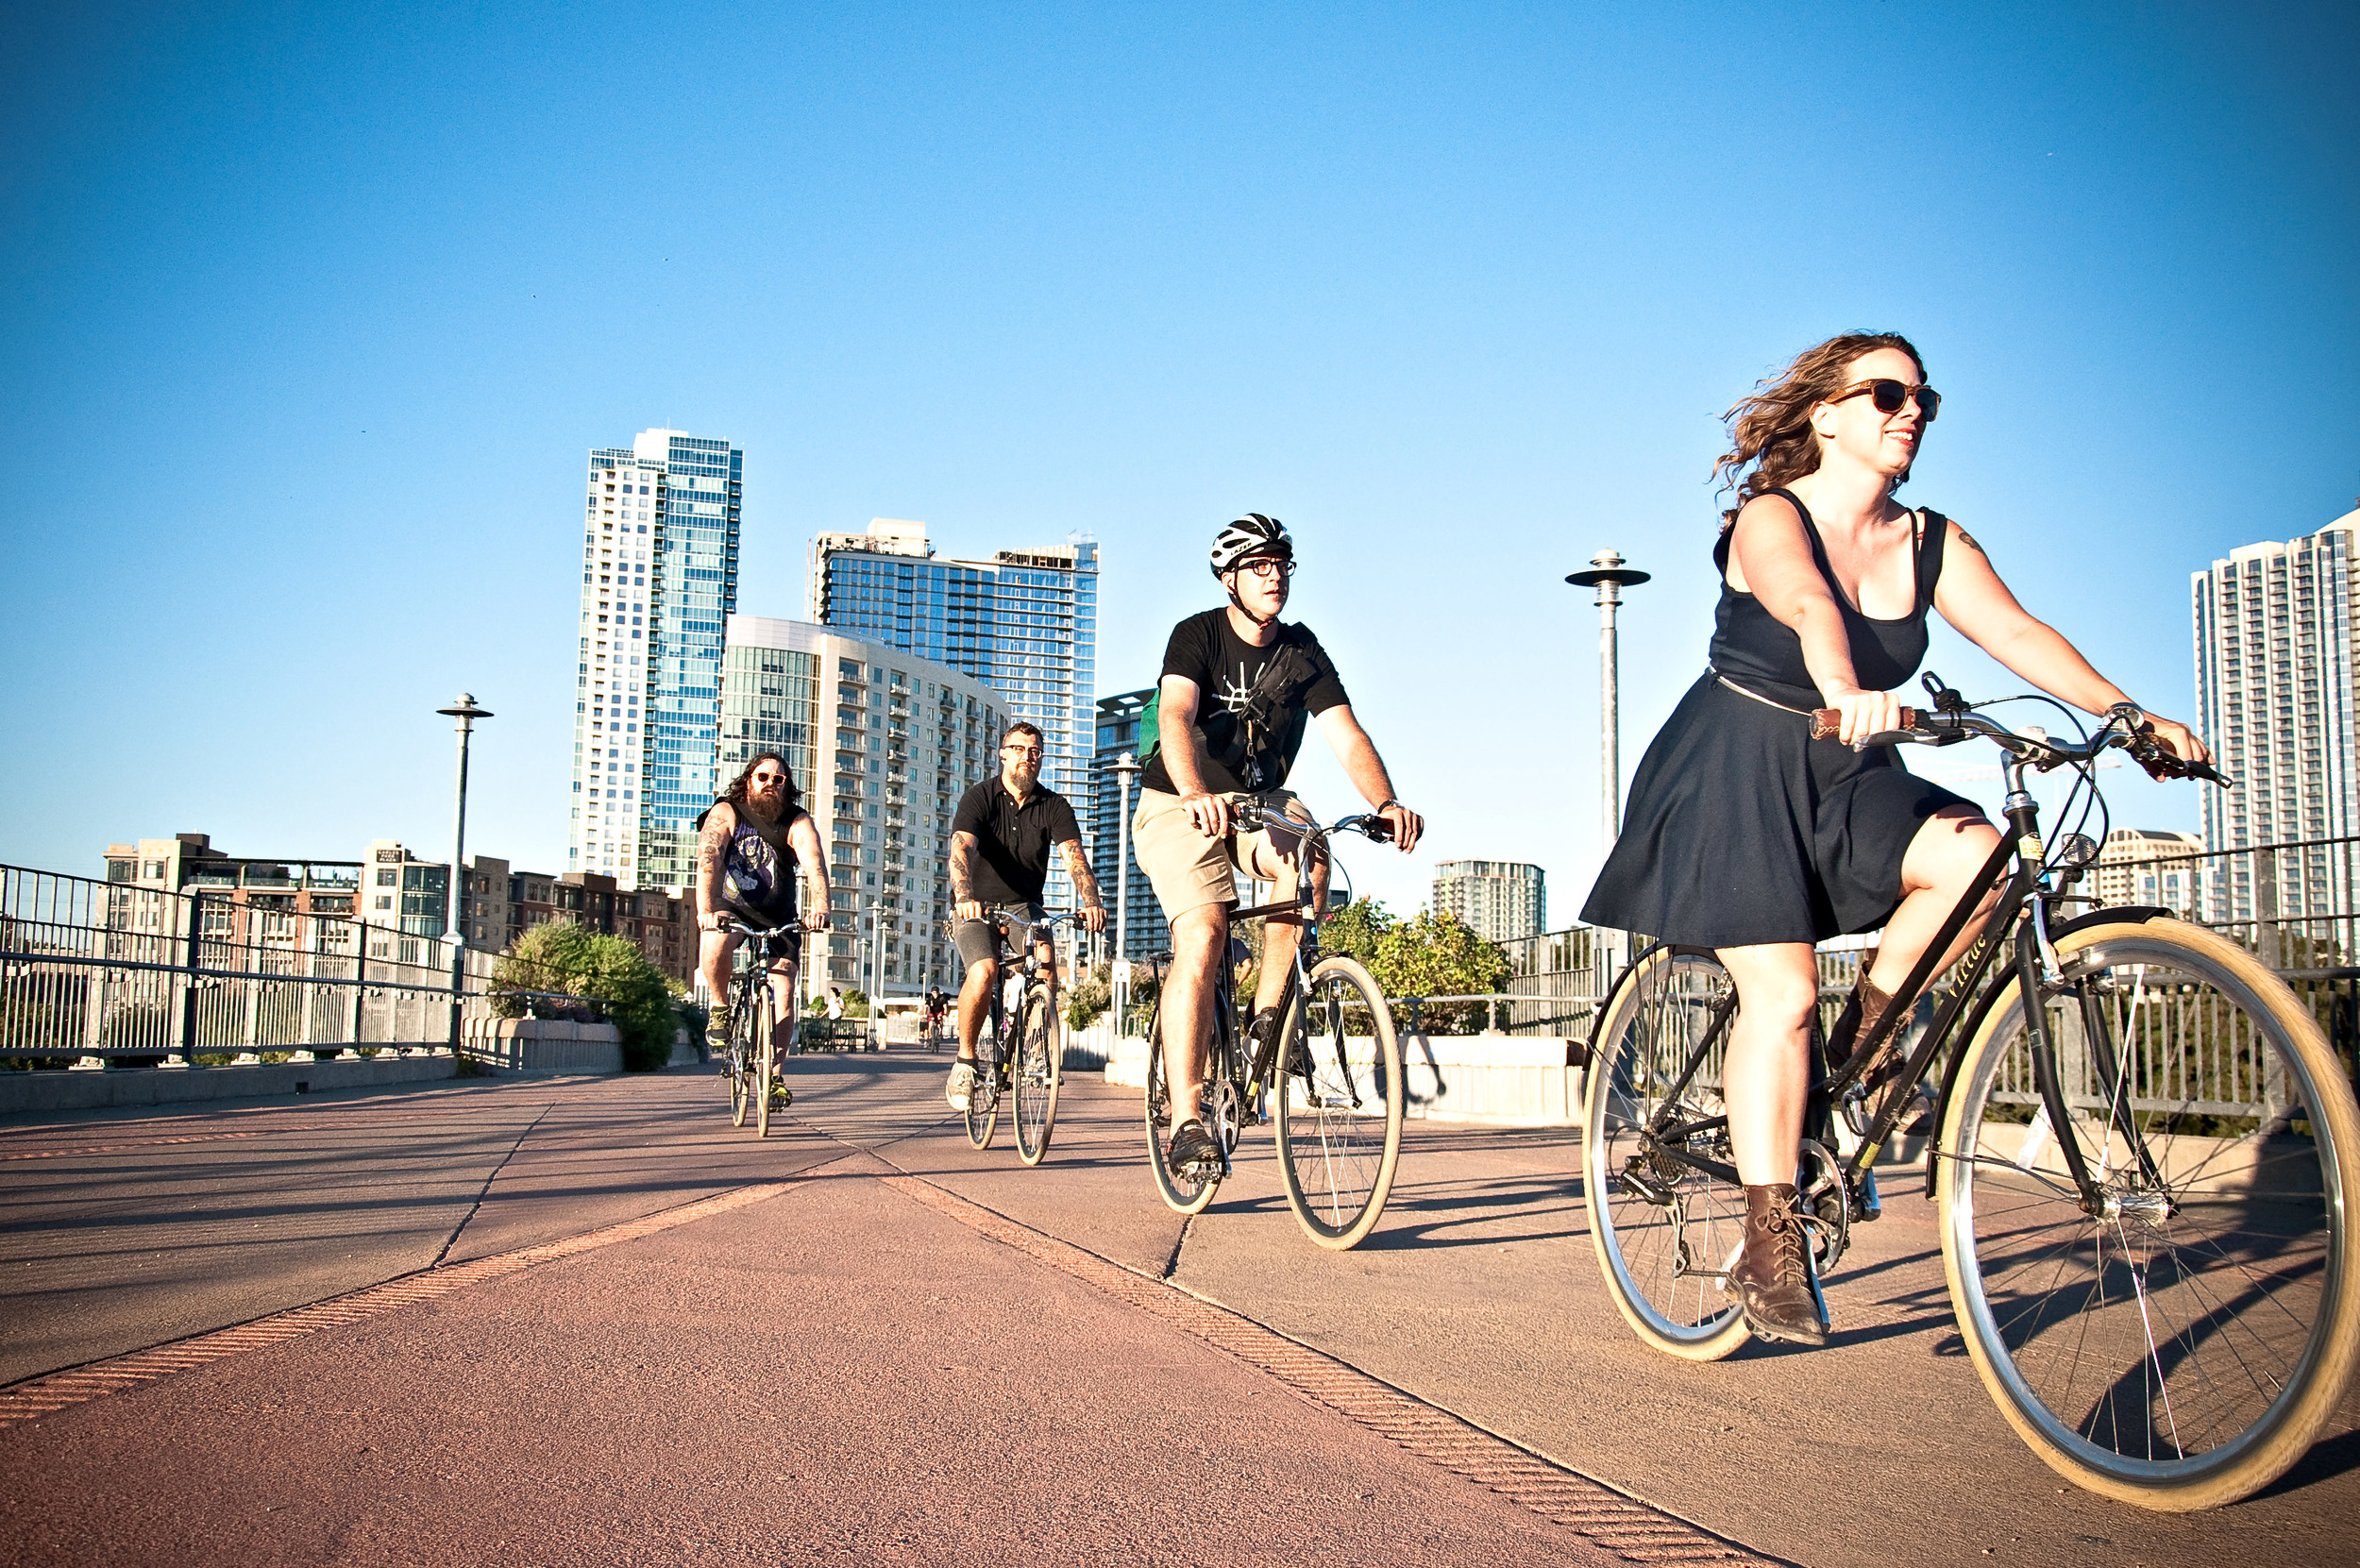 Get on the bike. Велосипед центр города. Велосипед центр города Европа. Downtown Leisure велосипед. Biking in City.